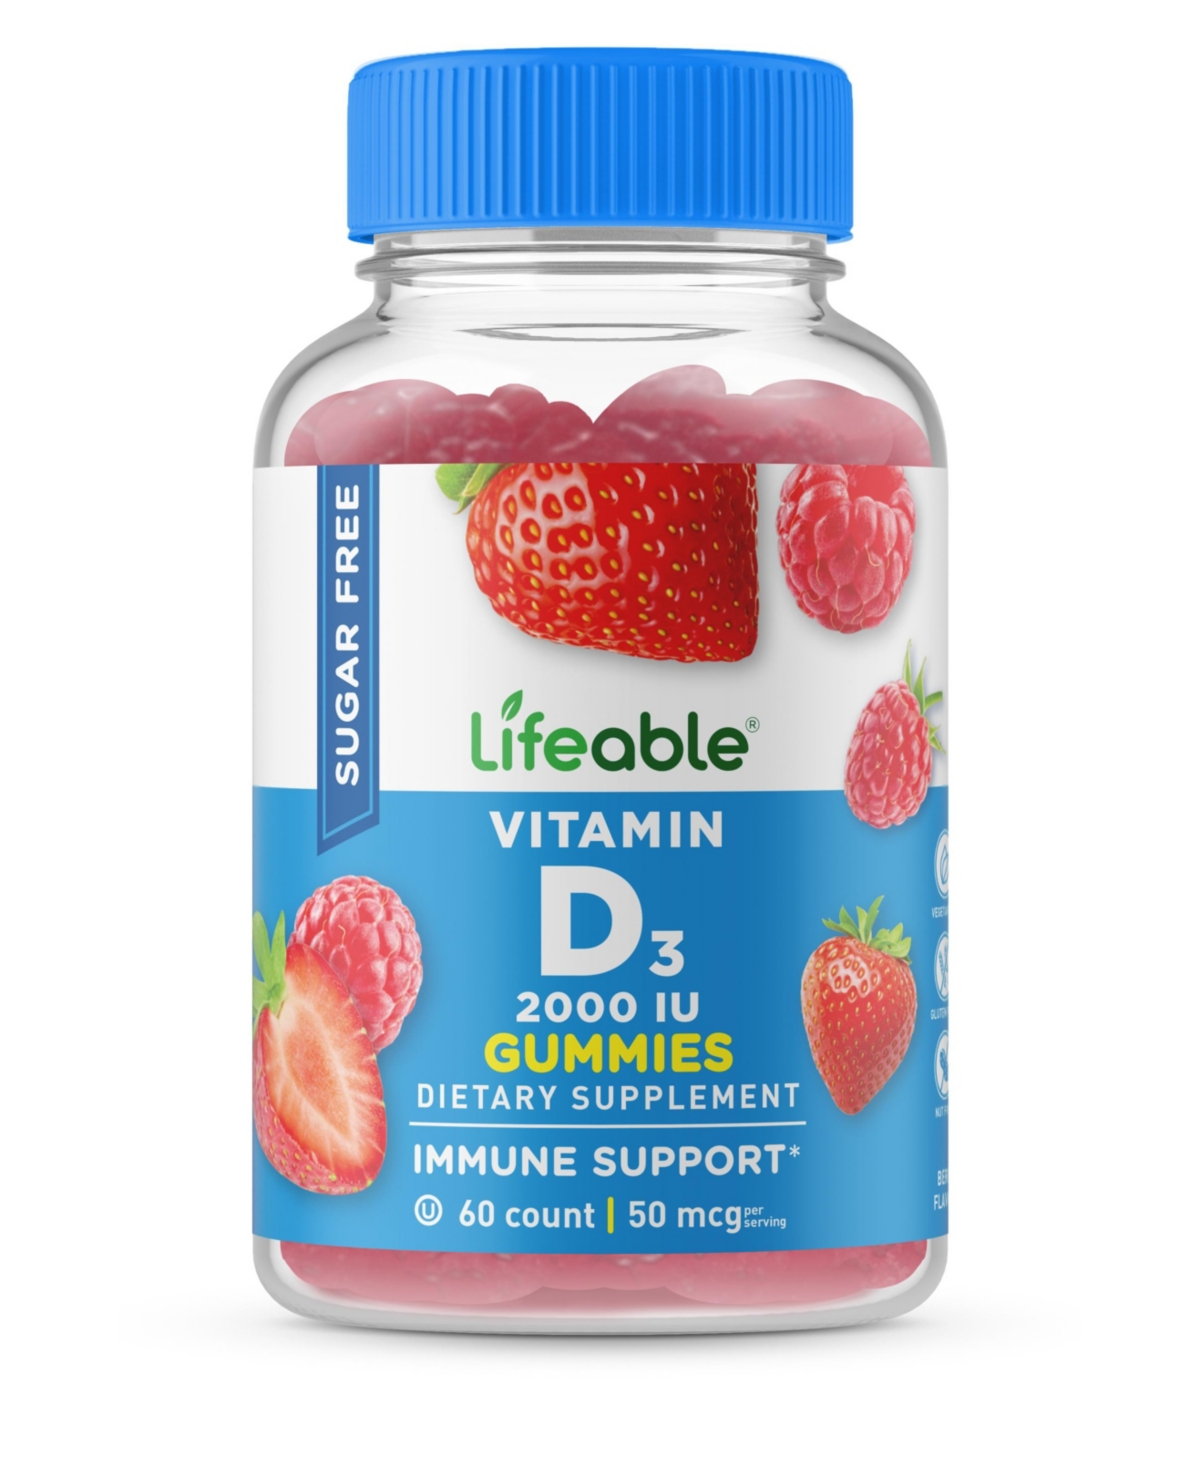 Sugar Free Vitamin D 2,000 Iu Gummies - Bone Health And Immunity - Great Tasting Natural Flavor, Dietary Supplement Vitamins - 60 Gummies - O